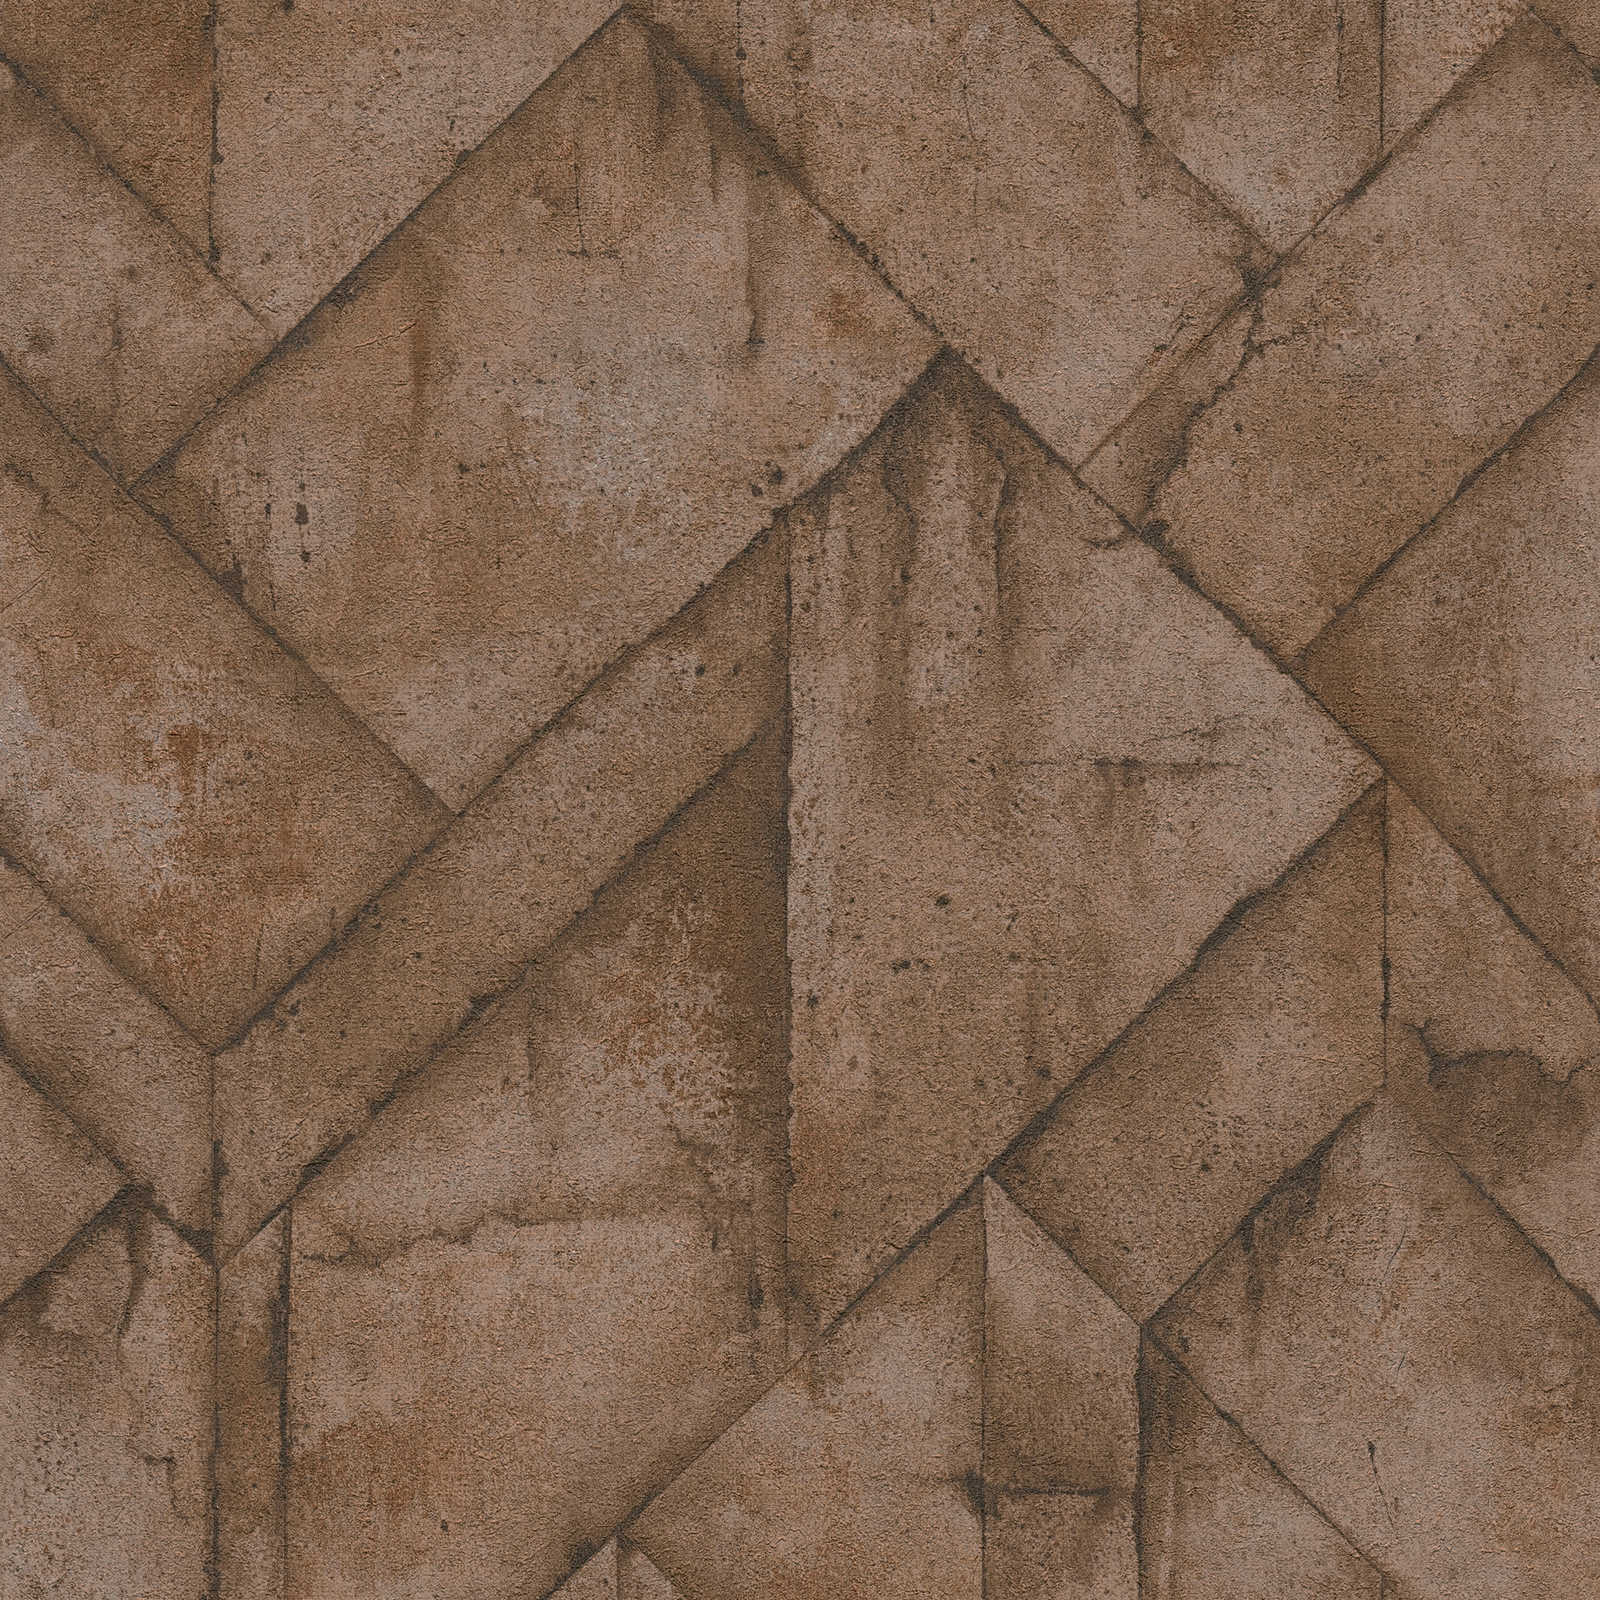 Concrete wallpaper geometric design & used look - brown, anthracite, orange
